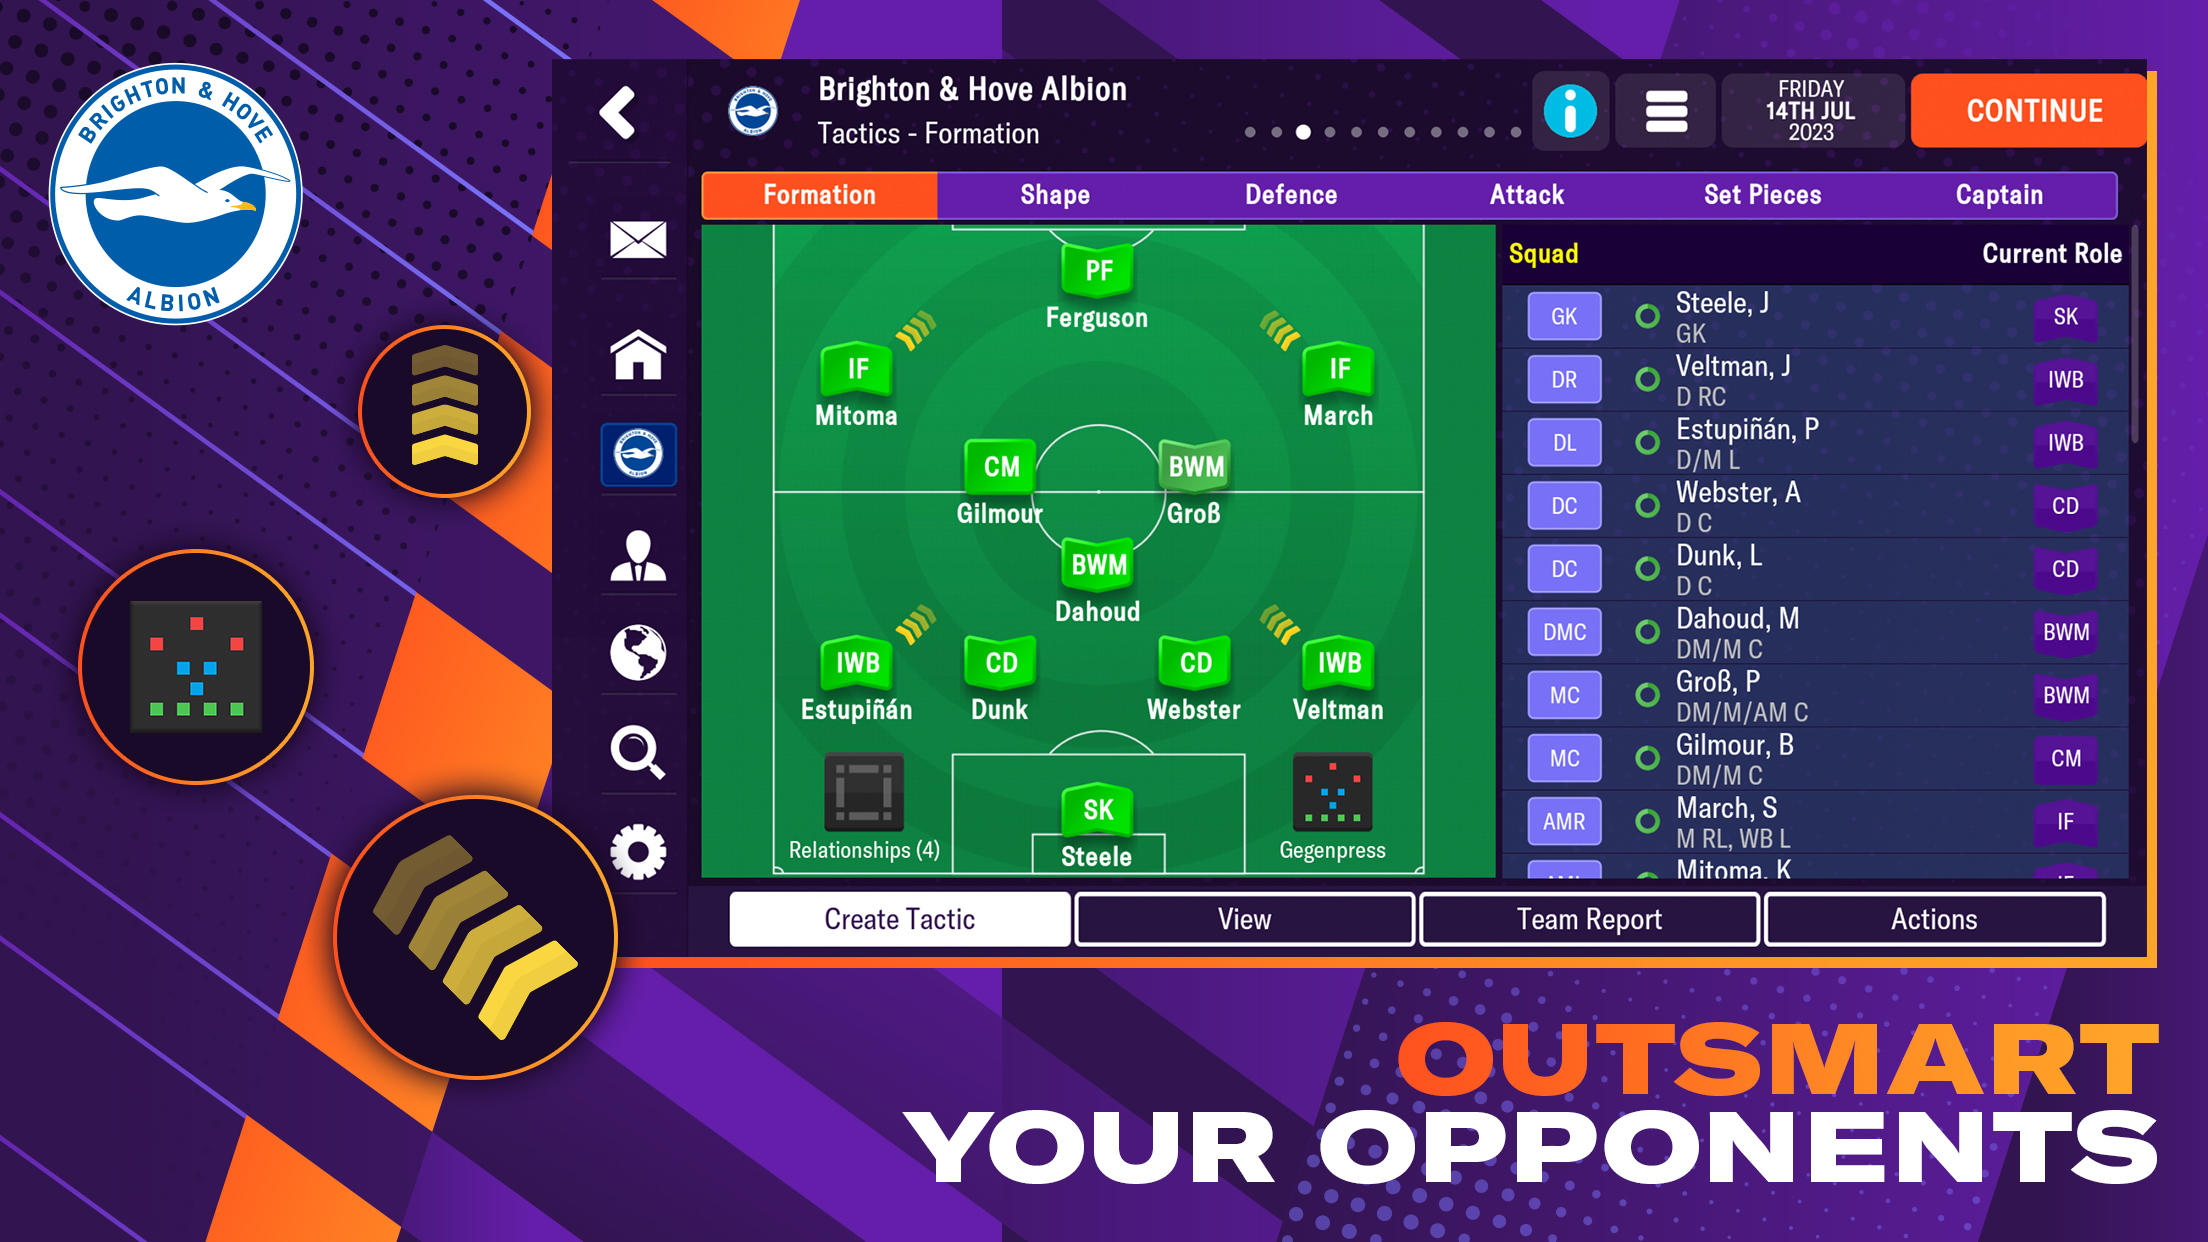 Football Manager 2022 Mobile já disponível na Google Play Store - Leak